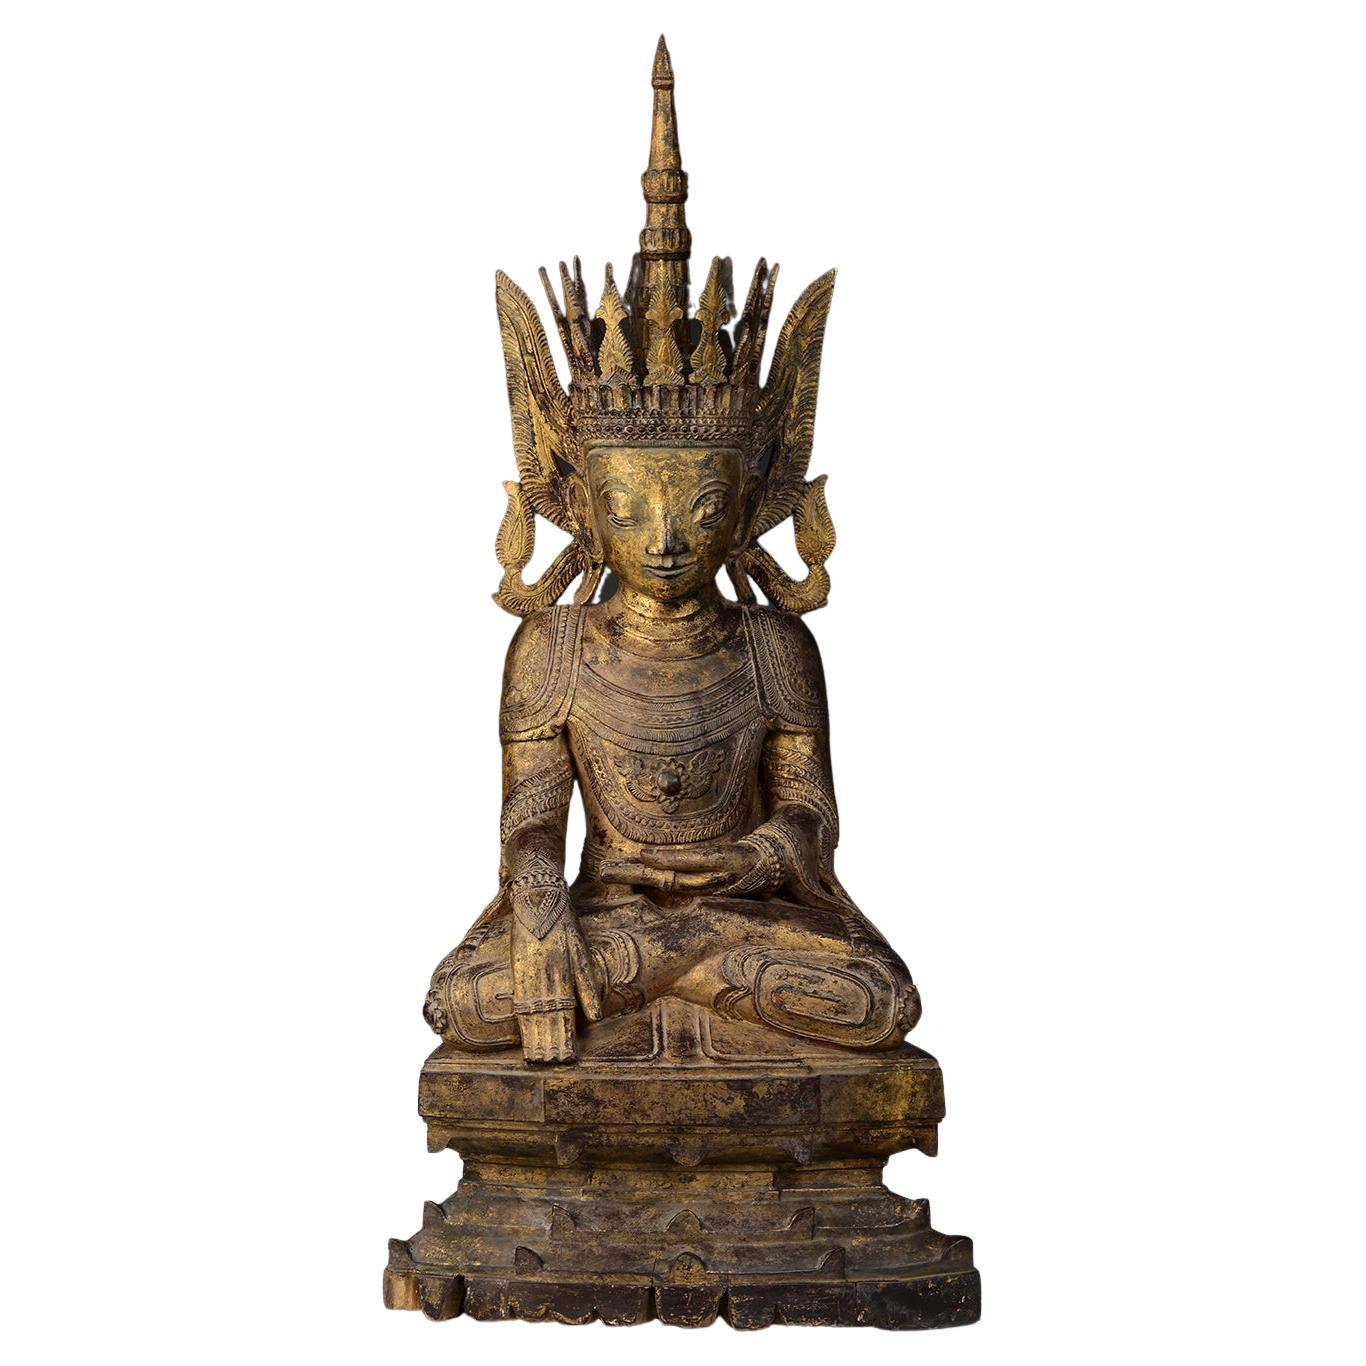 16th Century, Ava, Rare Antique Tai Yai Burmese Wooden Seated Crowned Buddha